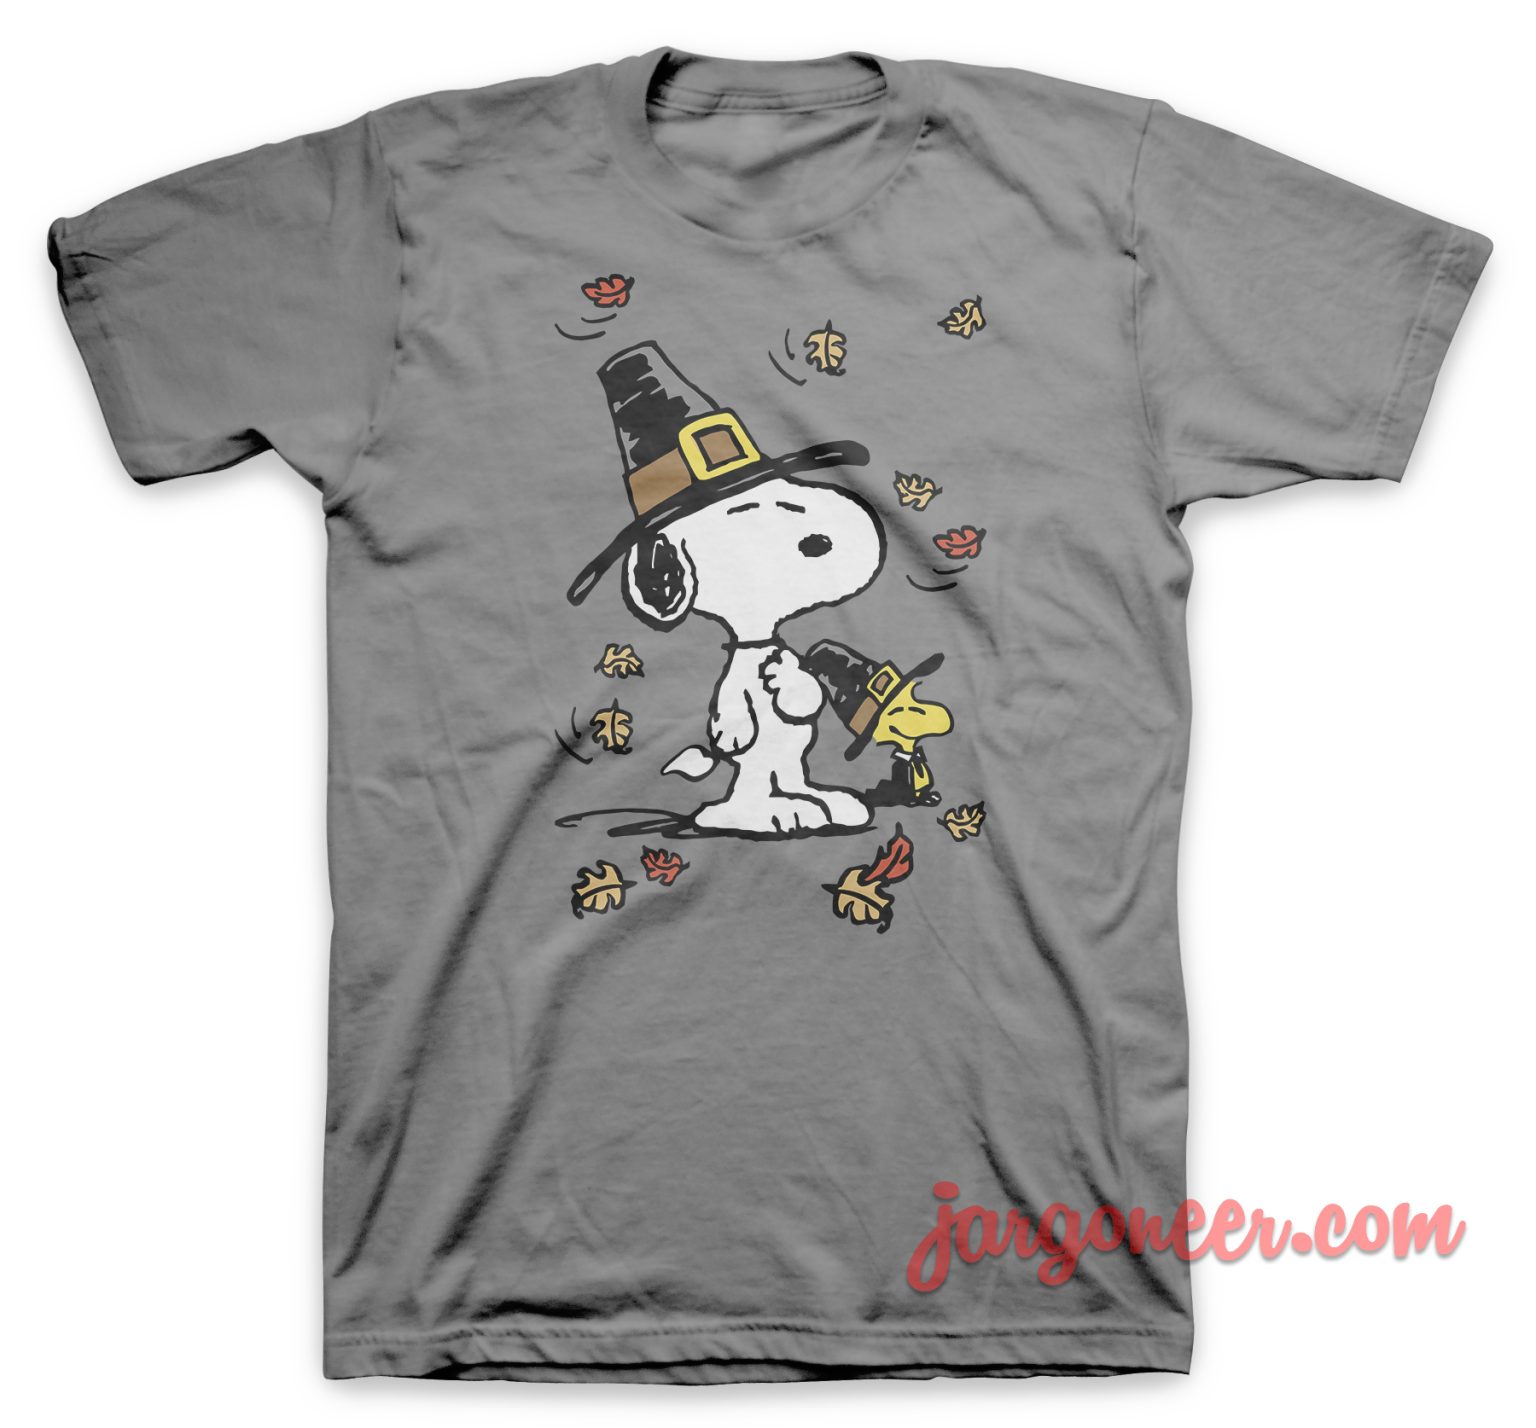 The Dog Of Thanksgiving Day T-Shirt | Cool Shirt Designs - Jargoneer.com